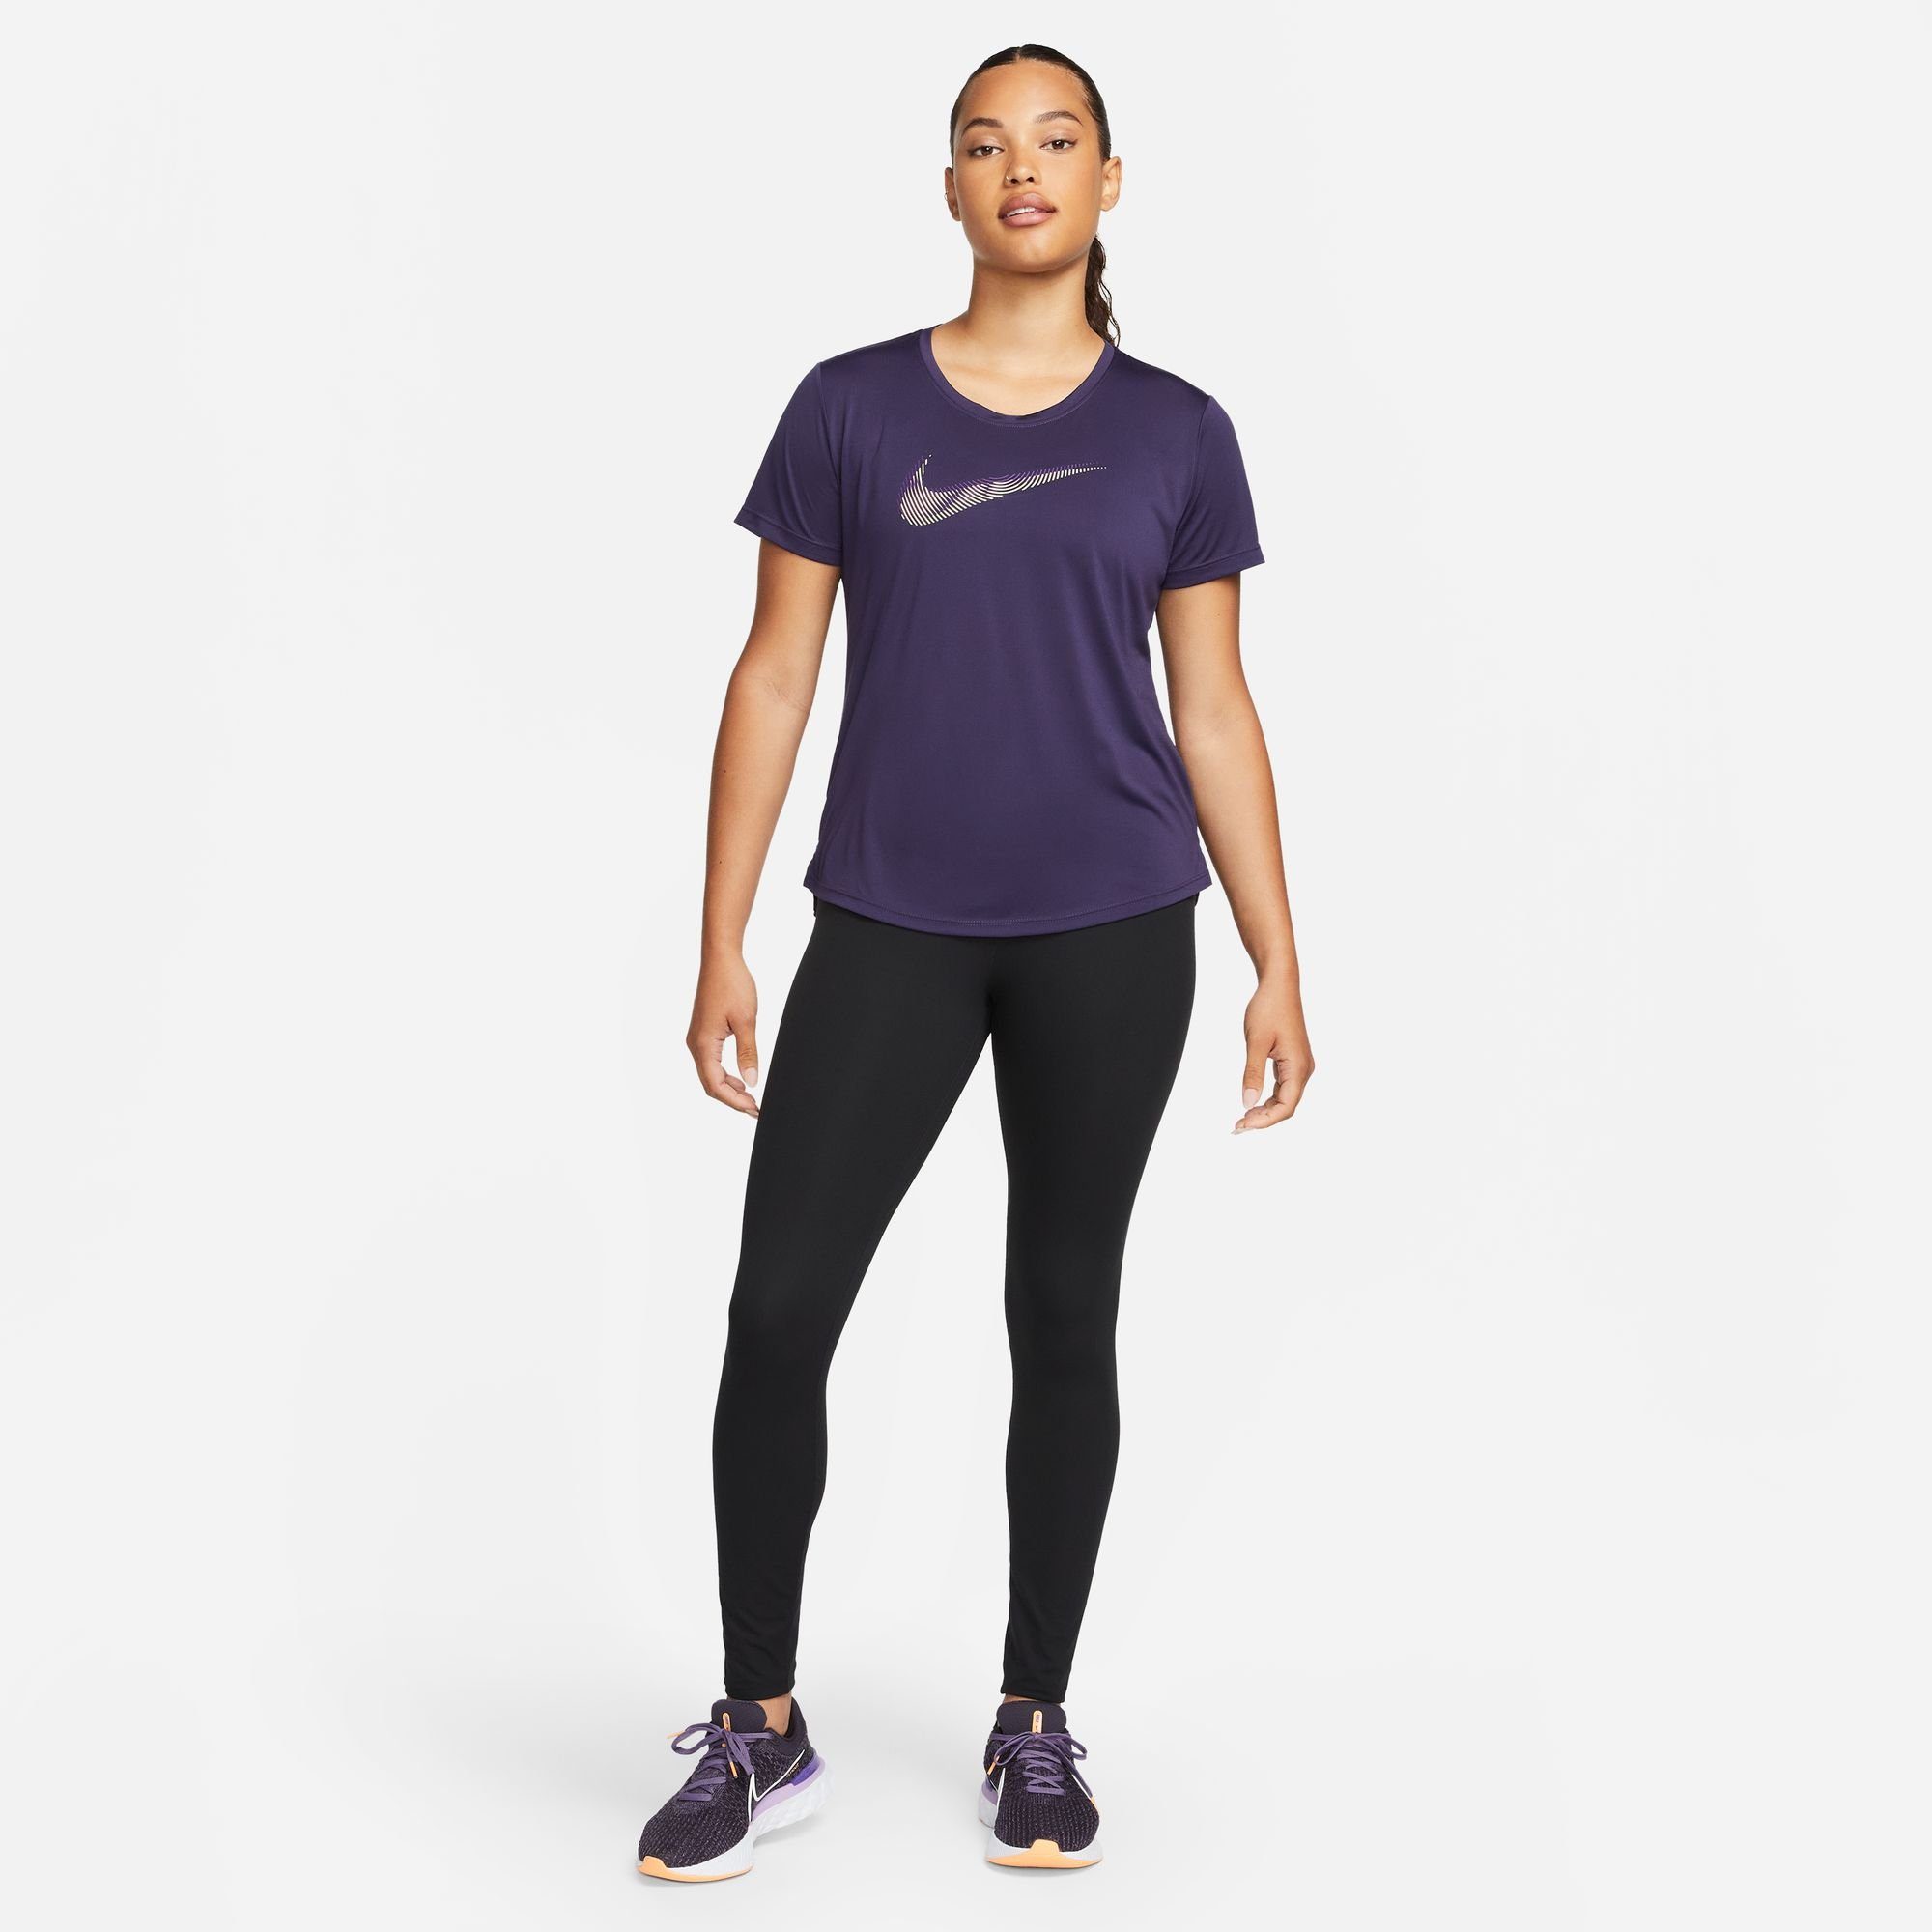 PURPLE SWOOSH TOP SHORT-SLEEVE Laufshirt INK/DISCO RUNNING PURPLE WOMEN'S Nike DRI-FIT